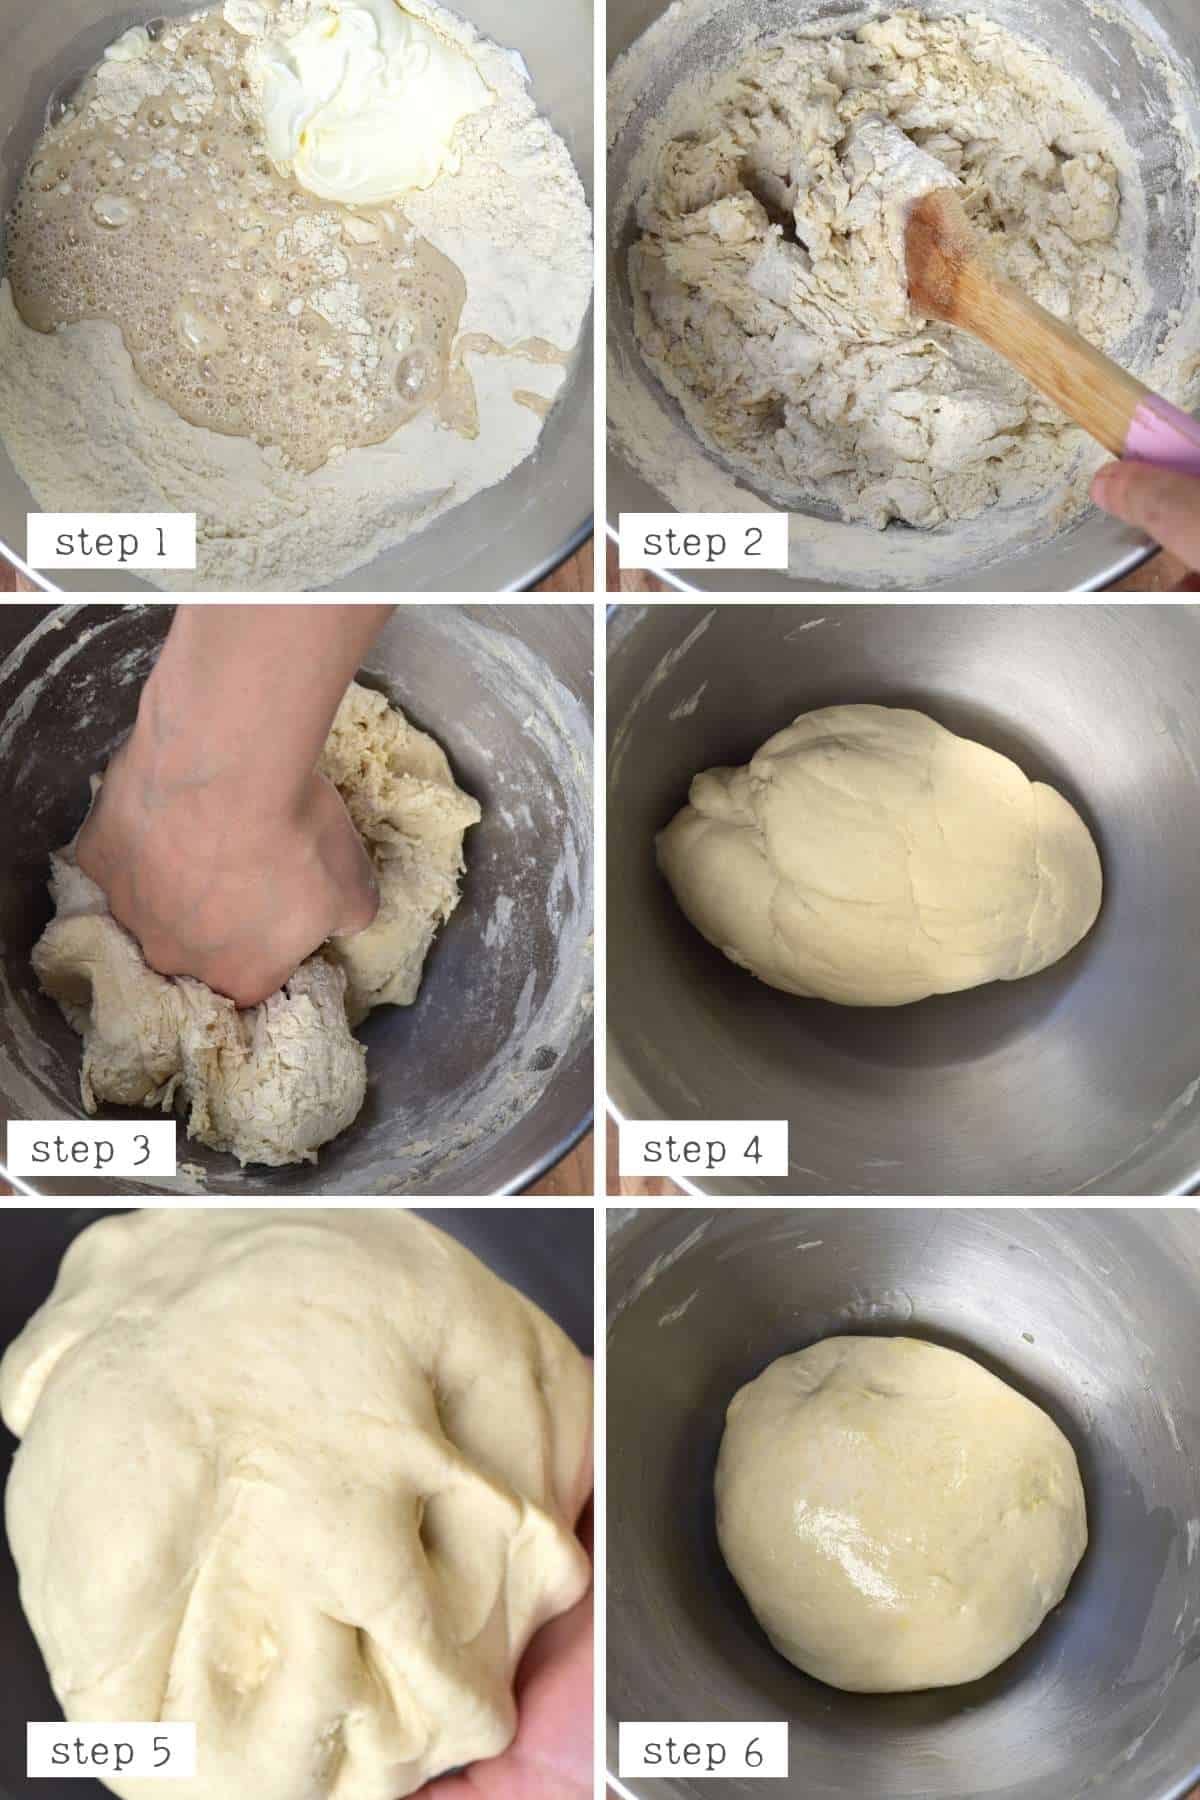 Steps for making manakish dough